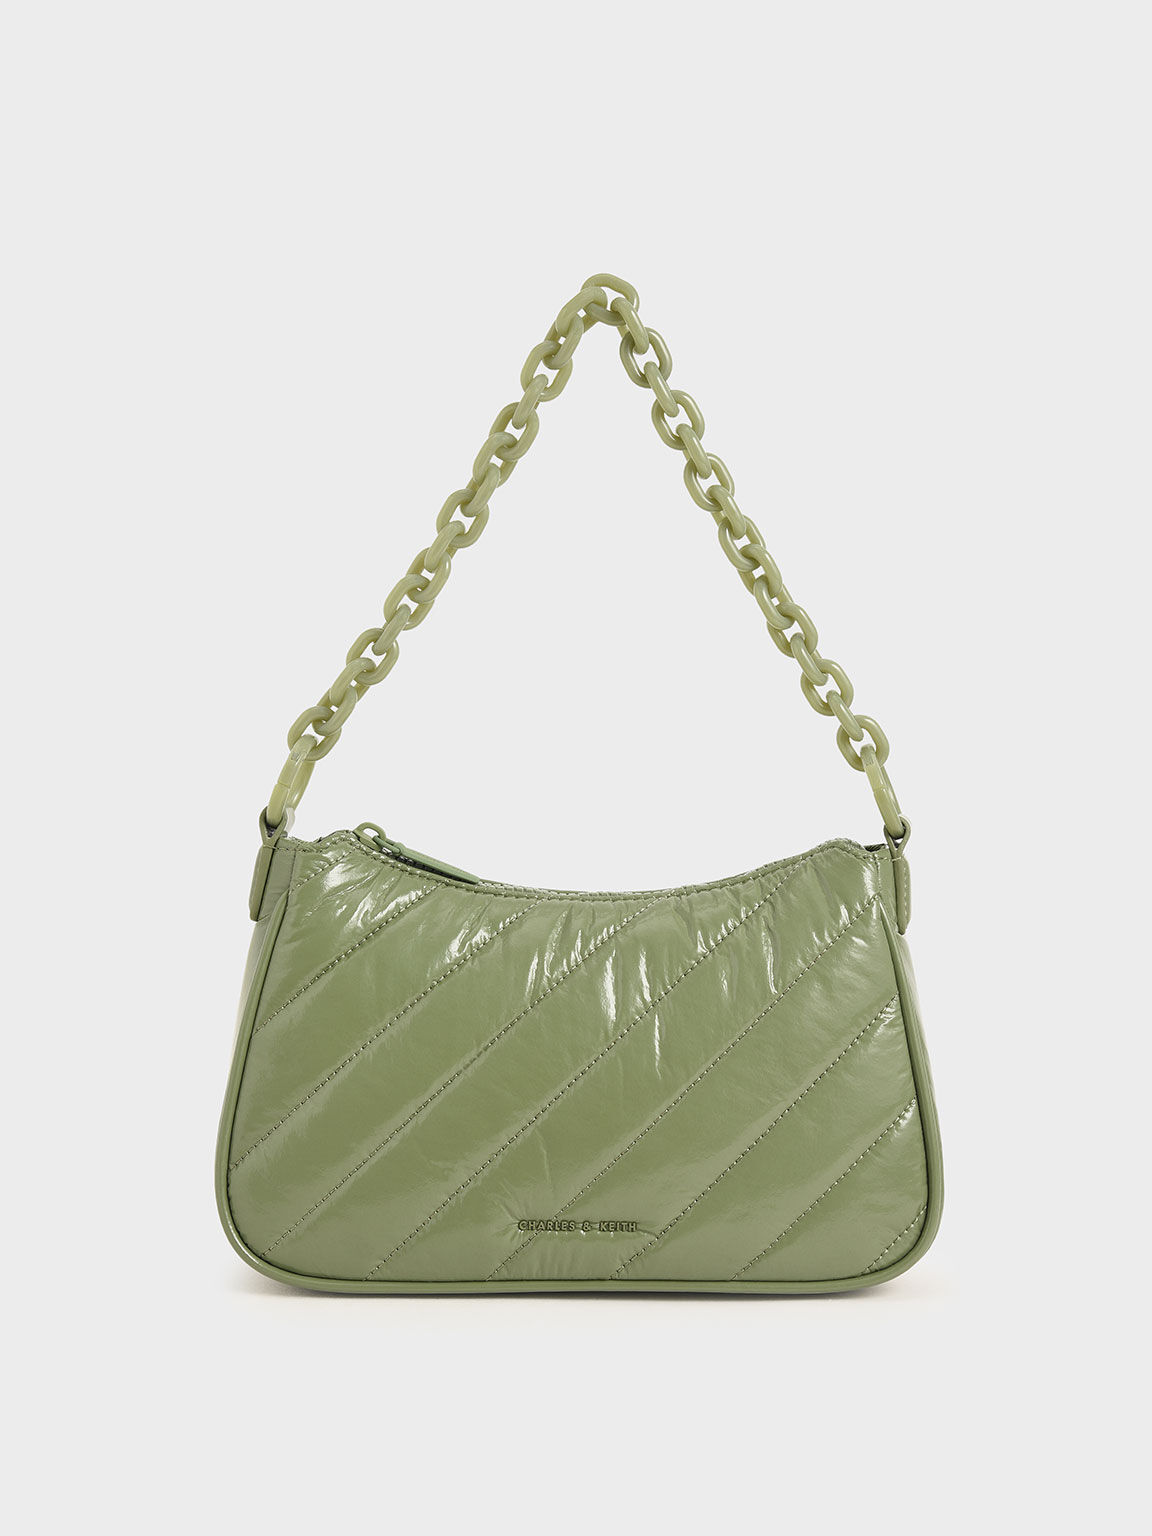 Buy i-bag Charles And Keith Bag ( color - Dark Green) Online at